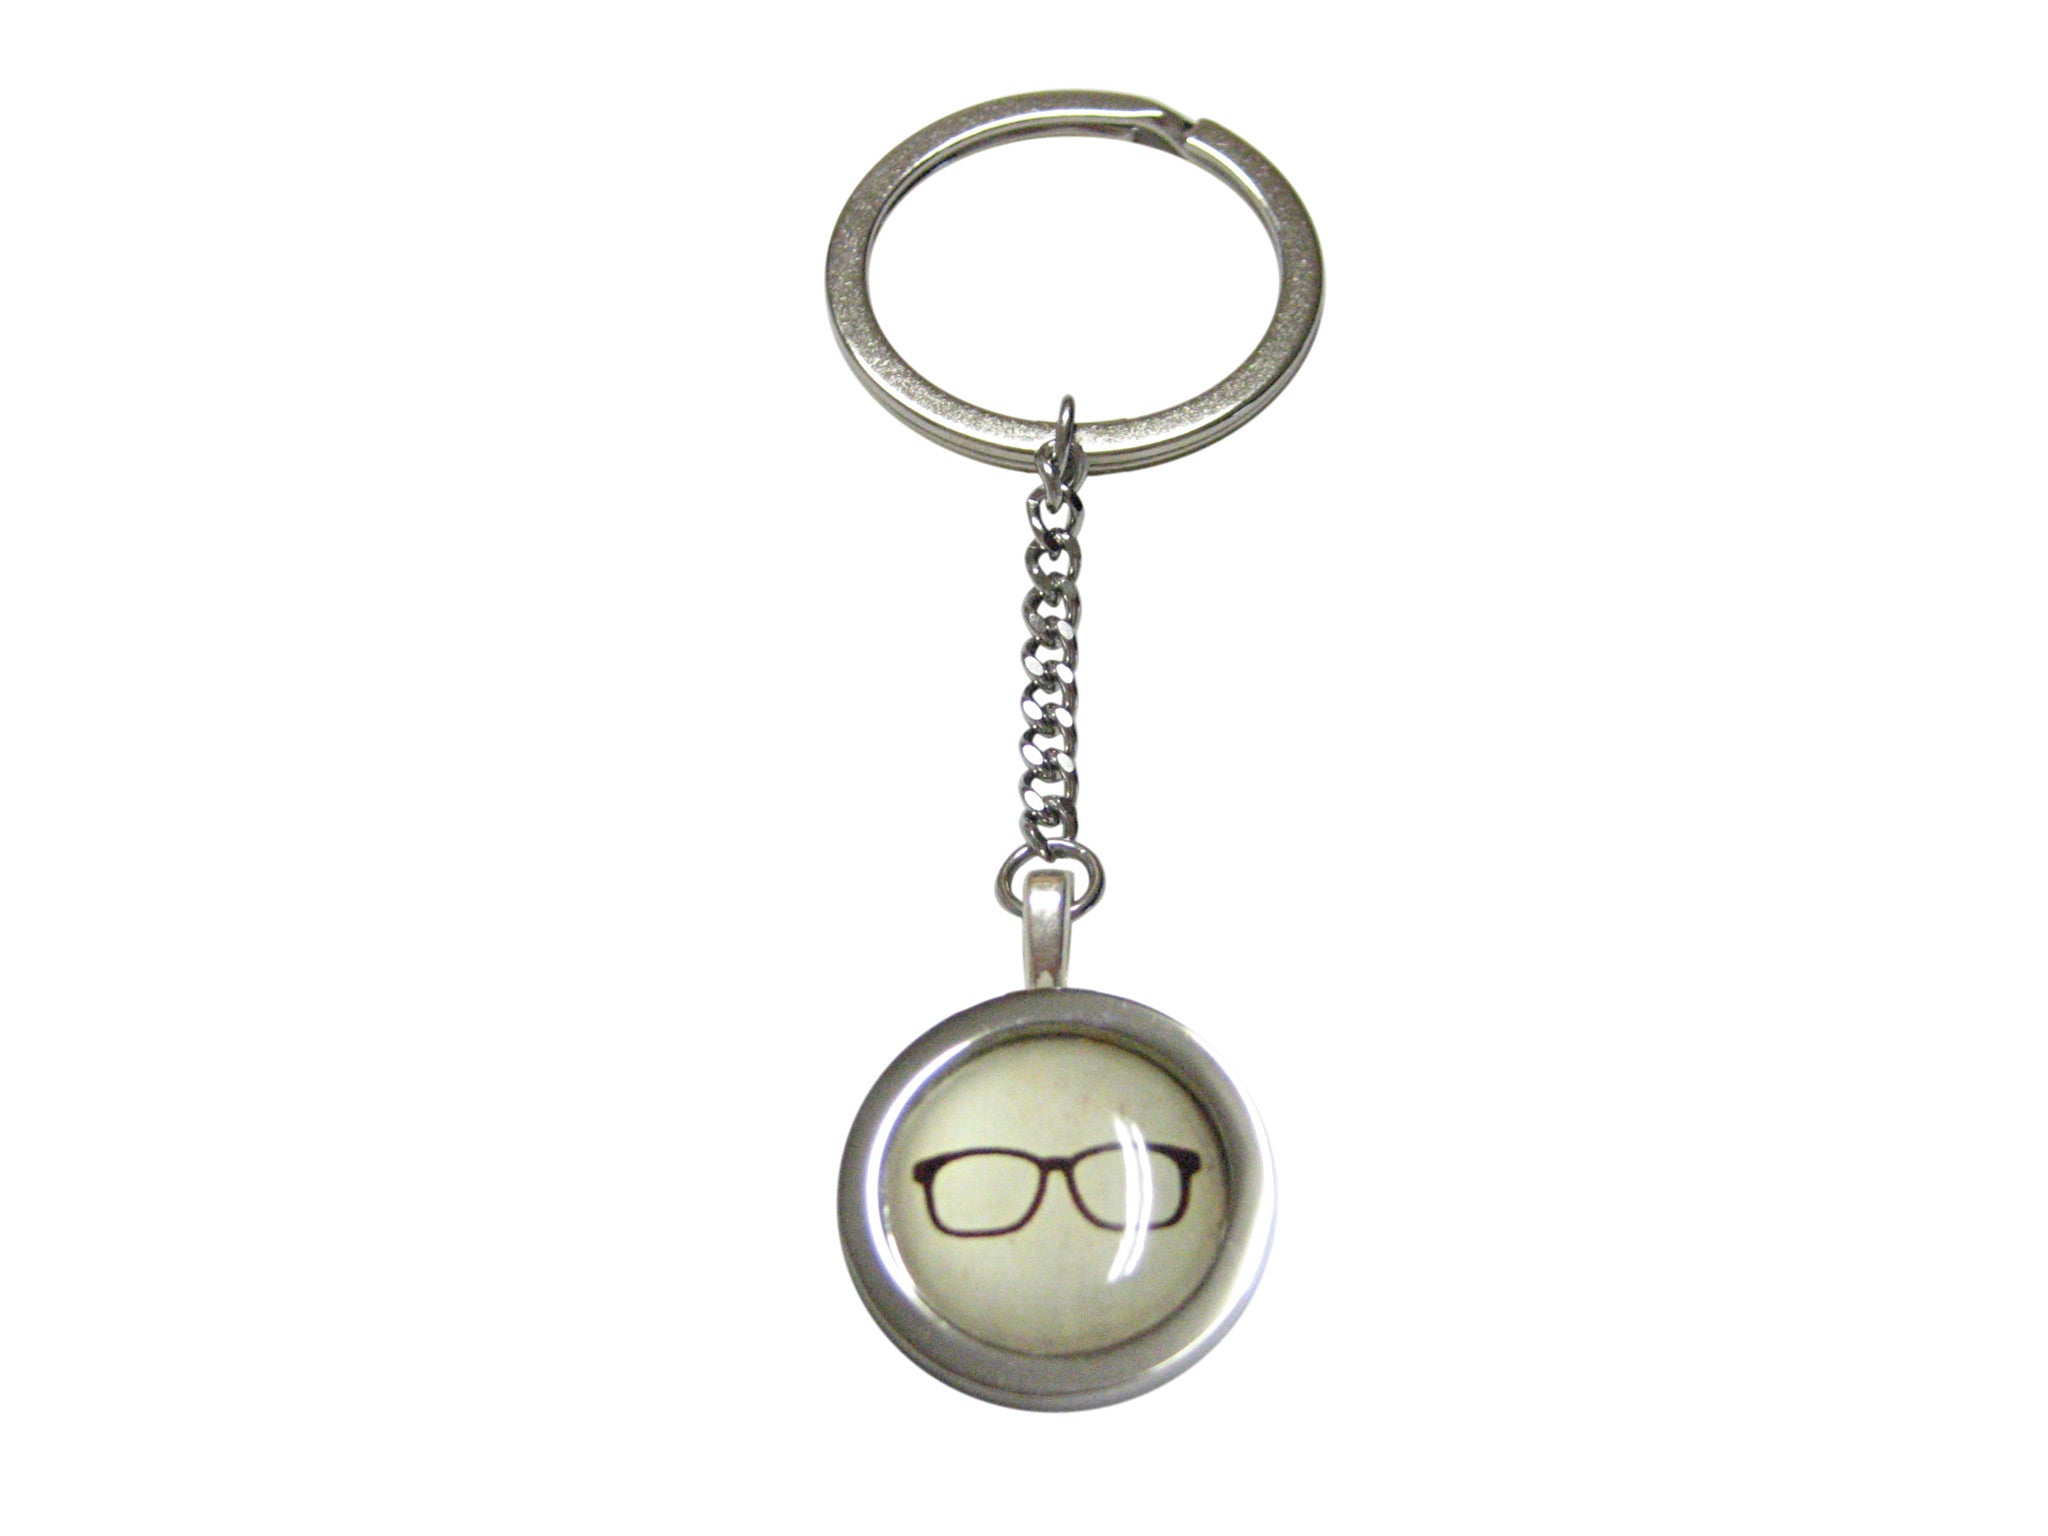 Bordered Hipster Glasses Pendant Keychain